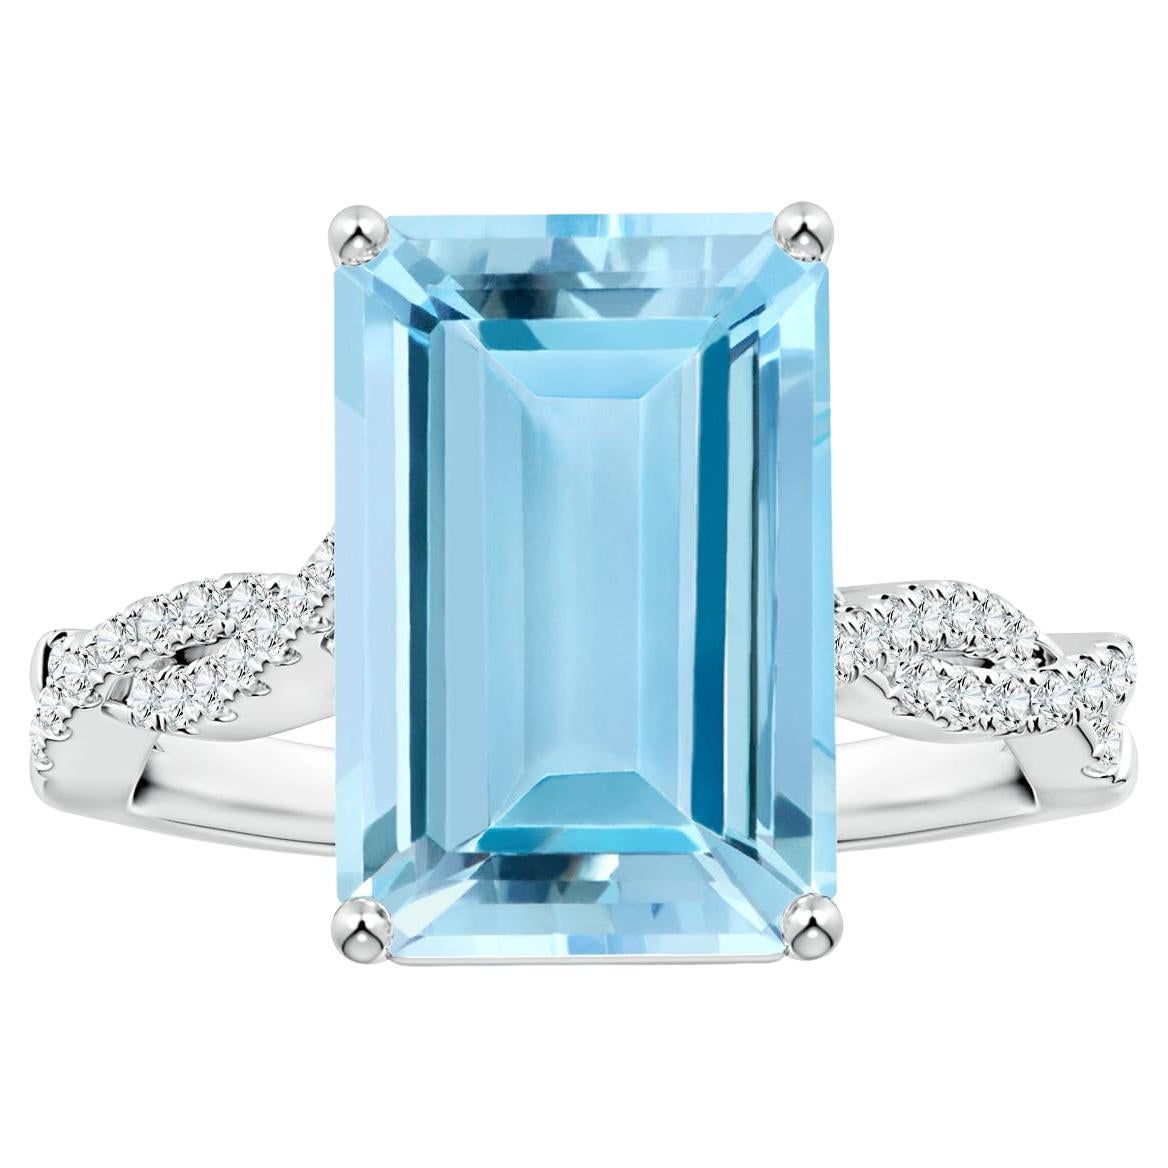 ANGARA GIA Certified Emerald-Cut Aquamarine Ring in Platinum with Diamond Shank